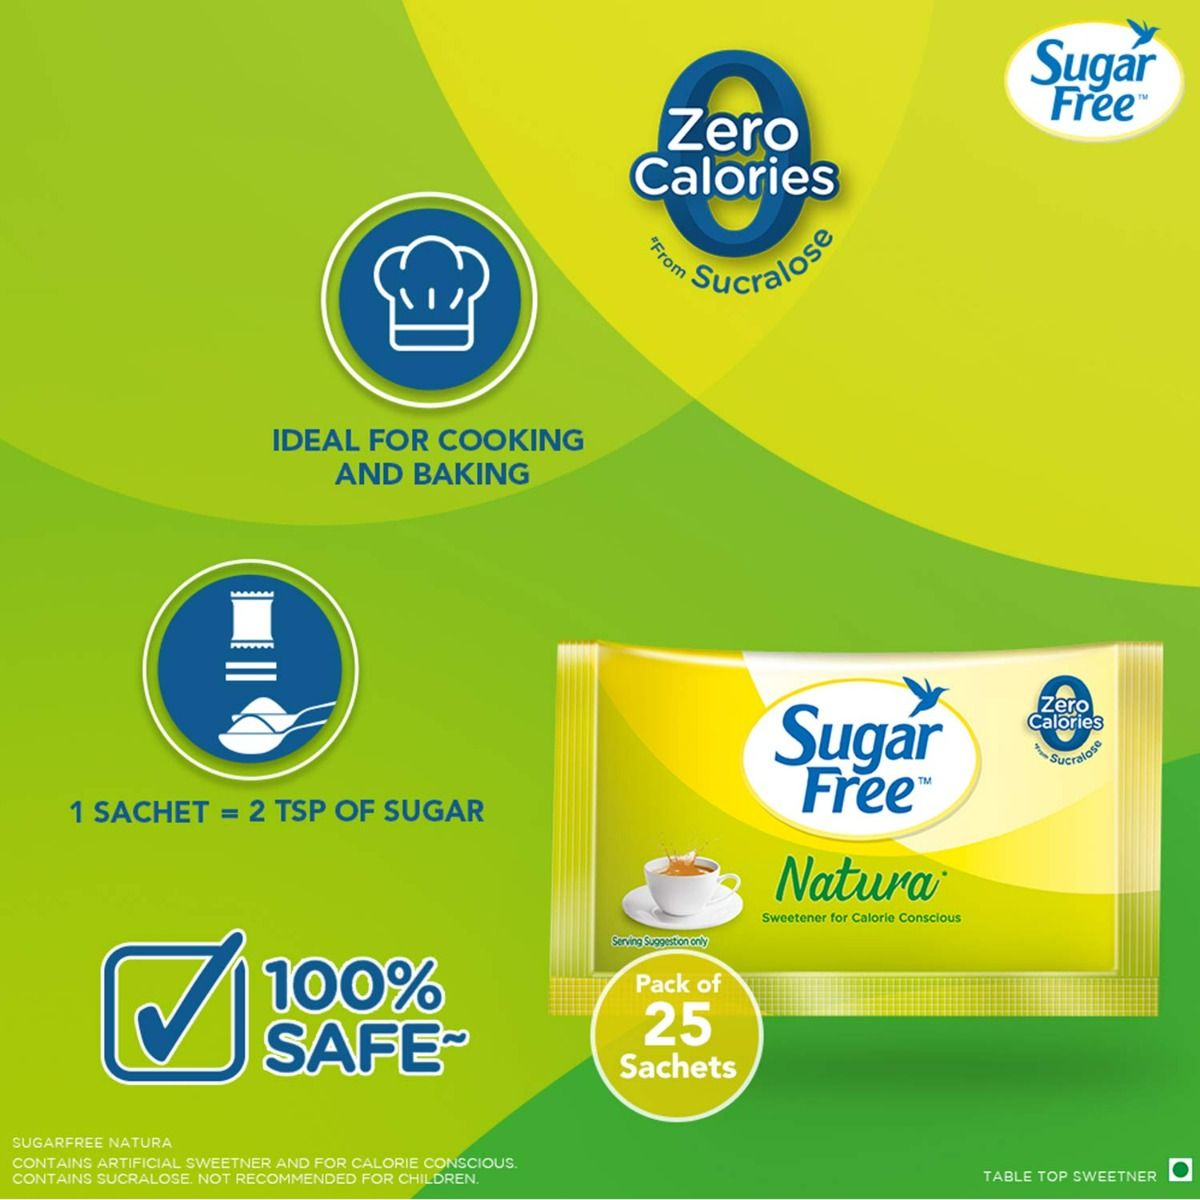 Sugar Free Natura Low Calorie Sugar Substitute, 25 Sachets, Pack of 1 